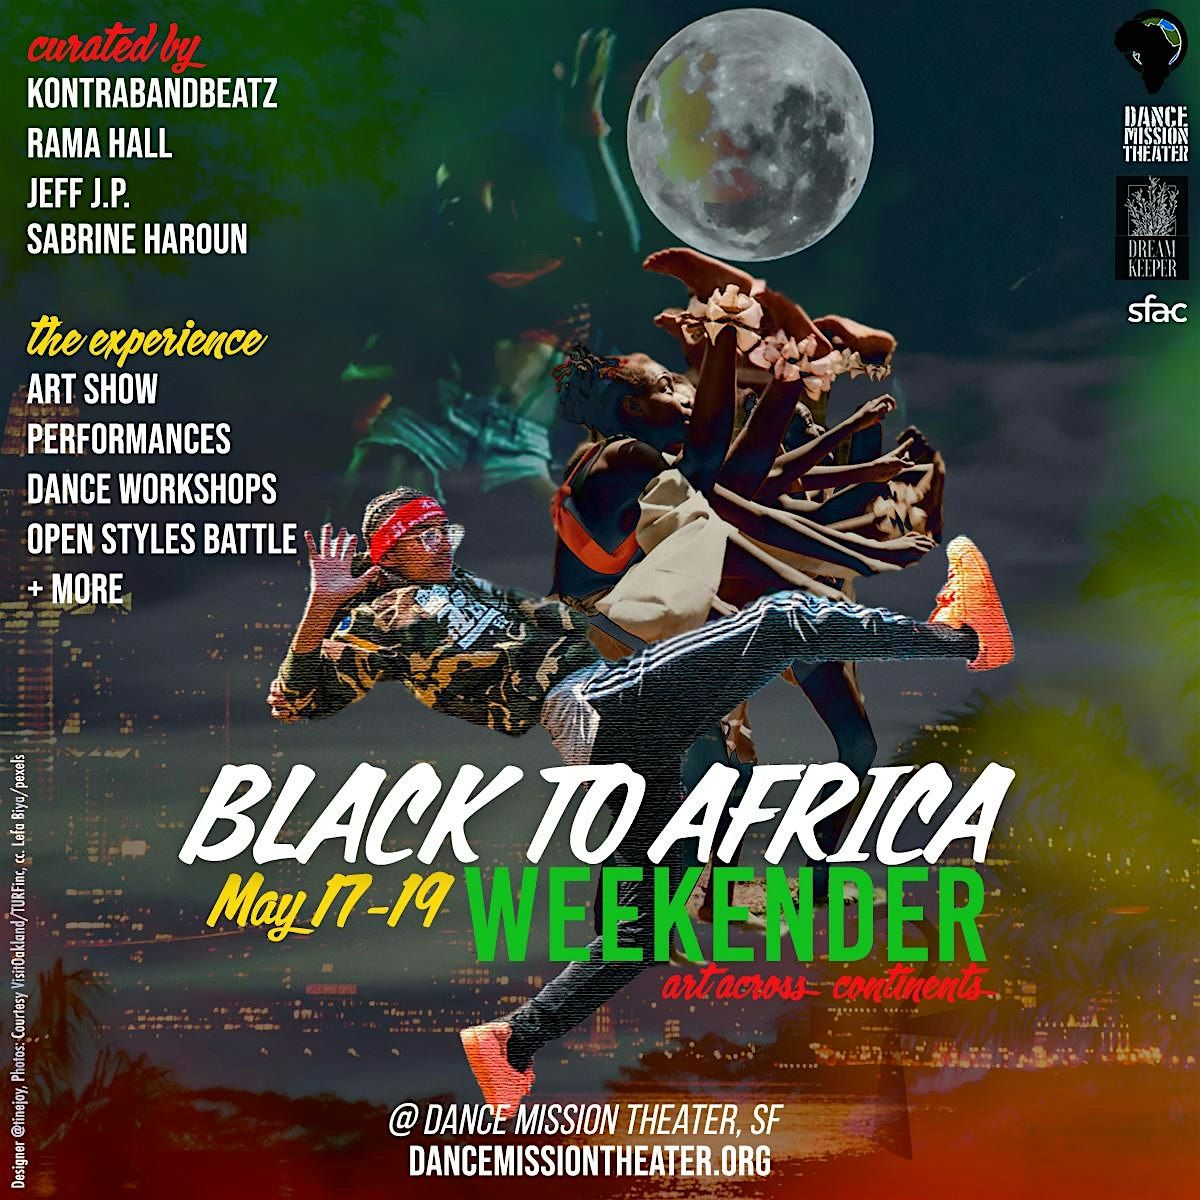 Black to Africa Weekender - Open Styles Battle